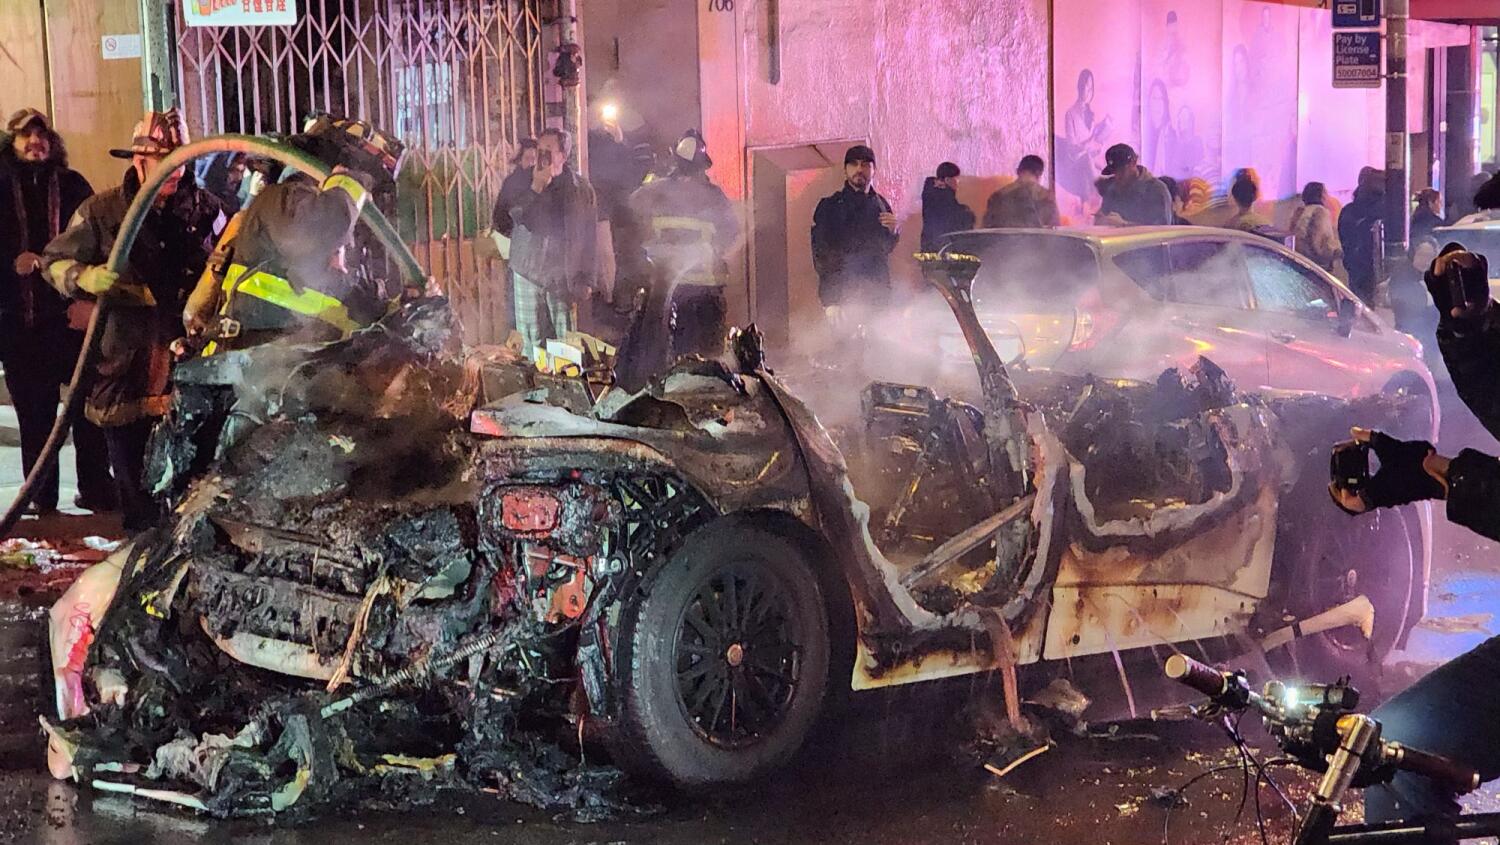 Robotaxi vandalized, set ablaze in San Francisco's Chinatown